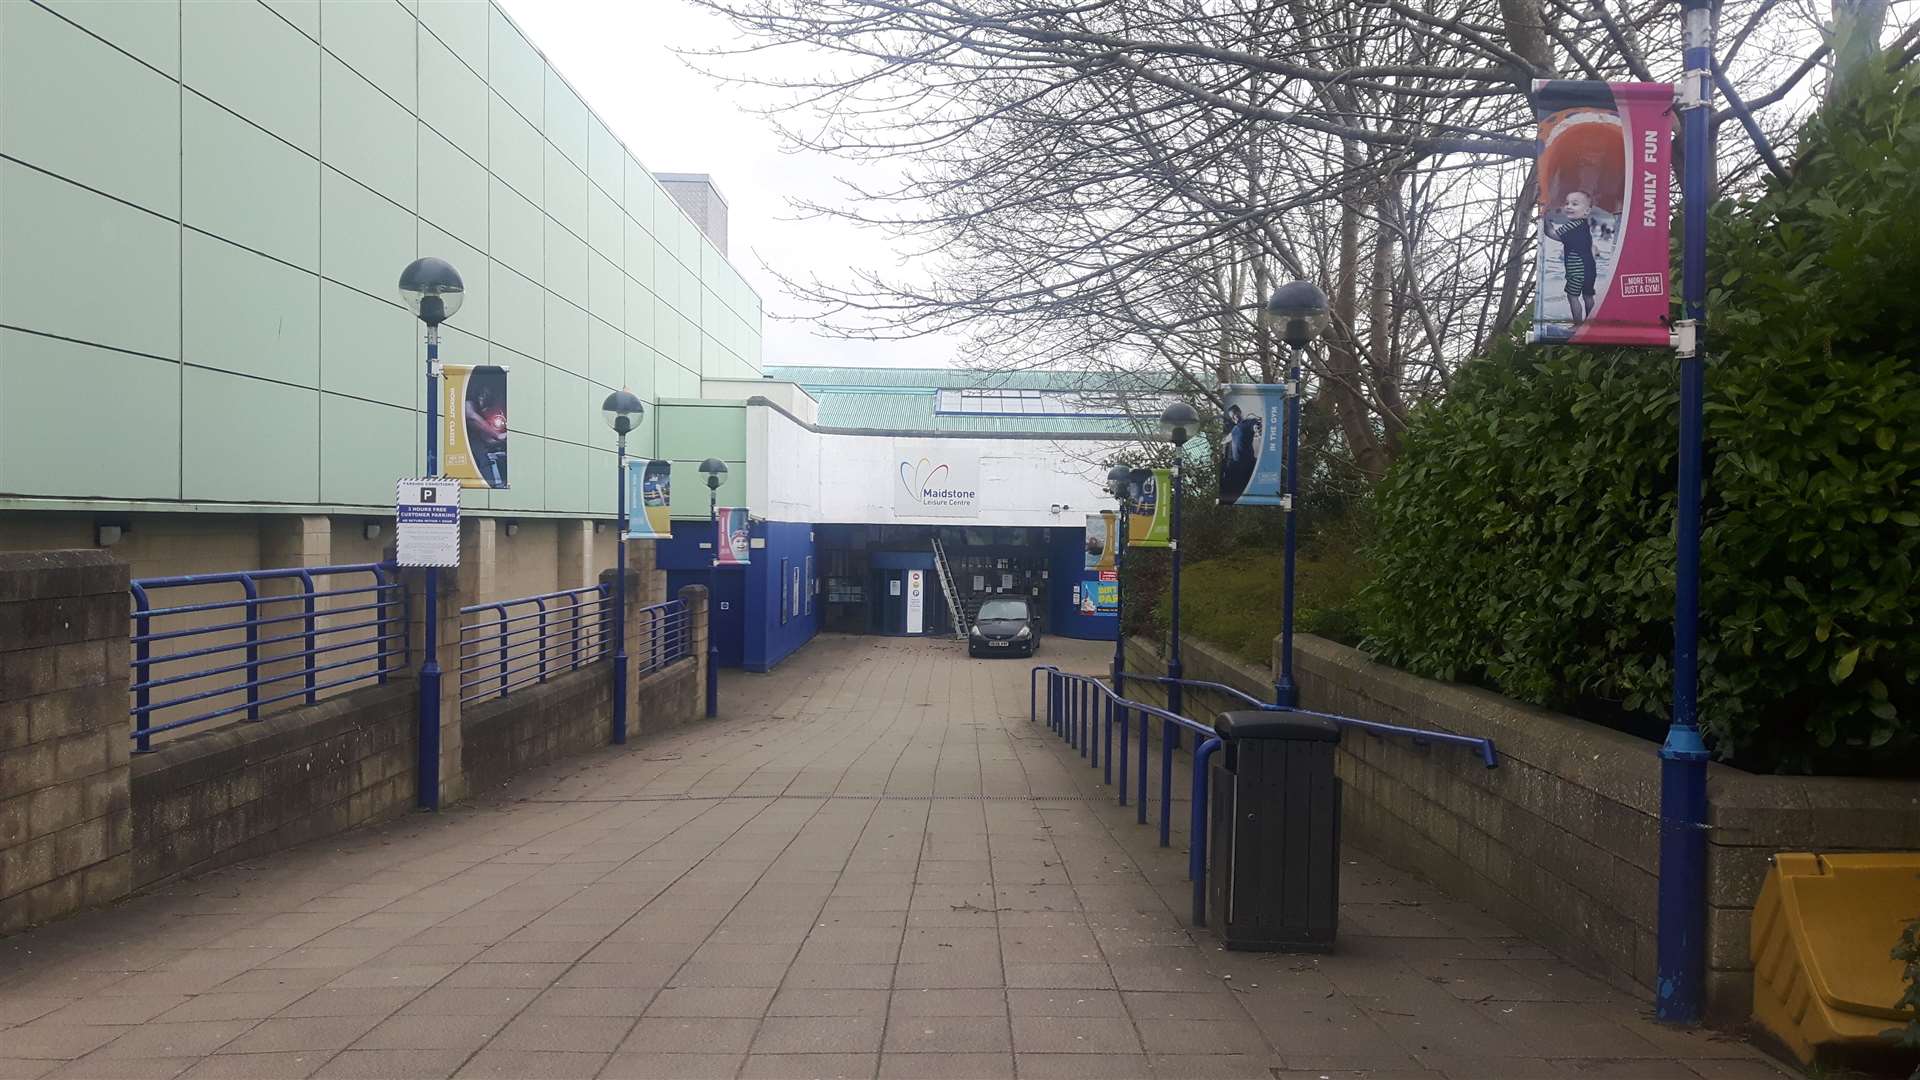 Maidstone Leisure Centre at Mote Park